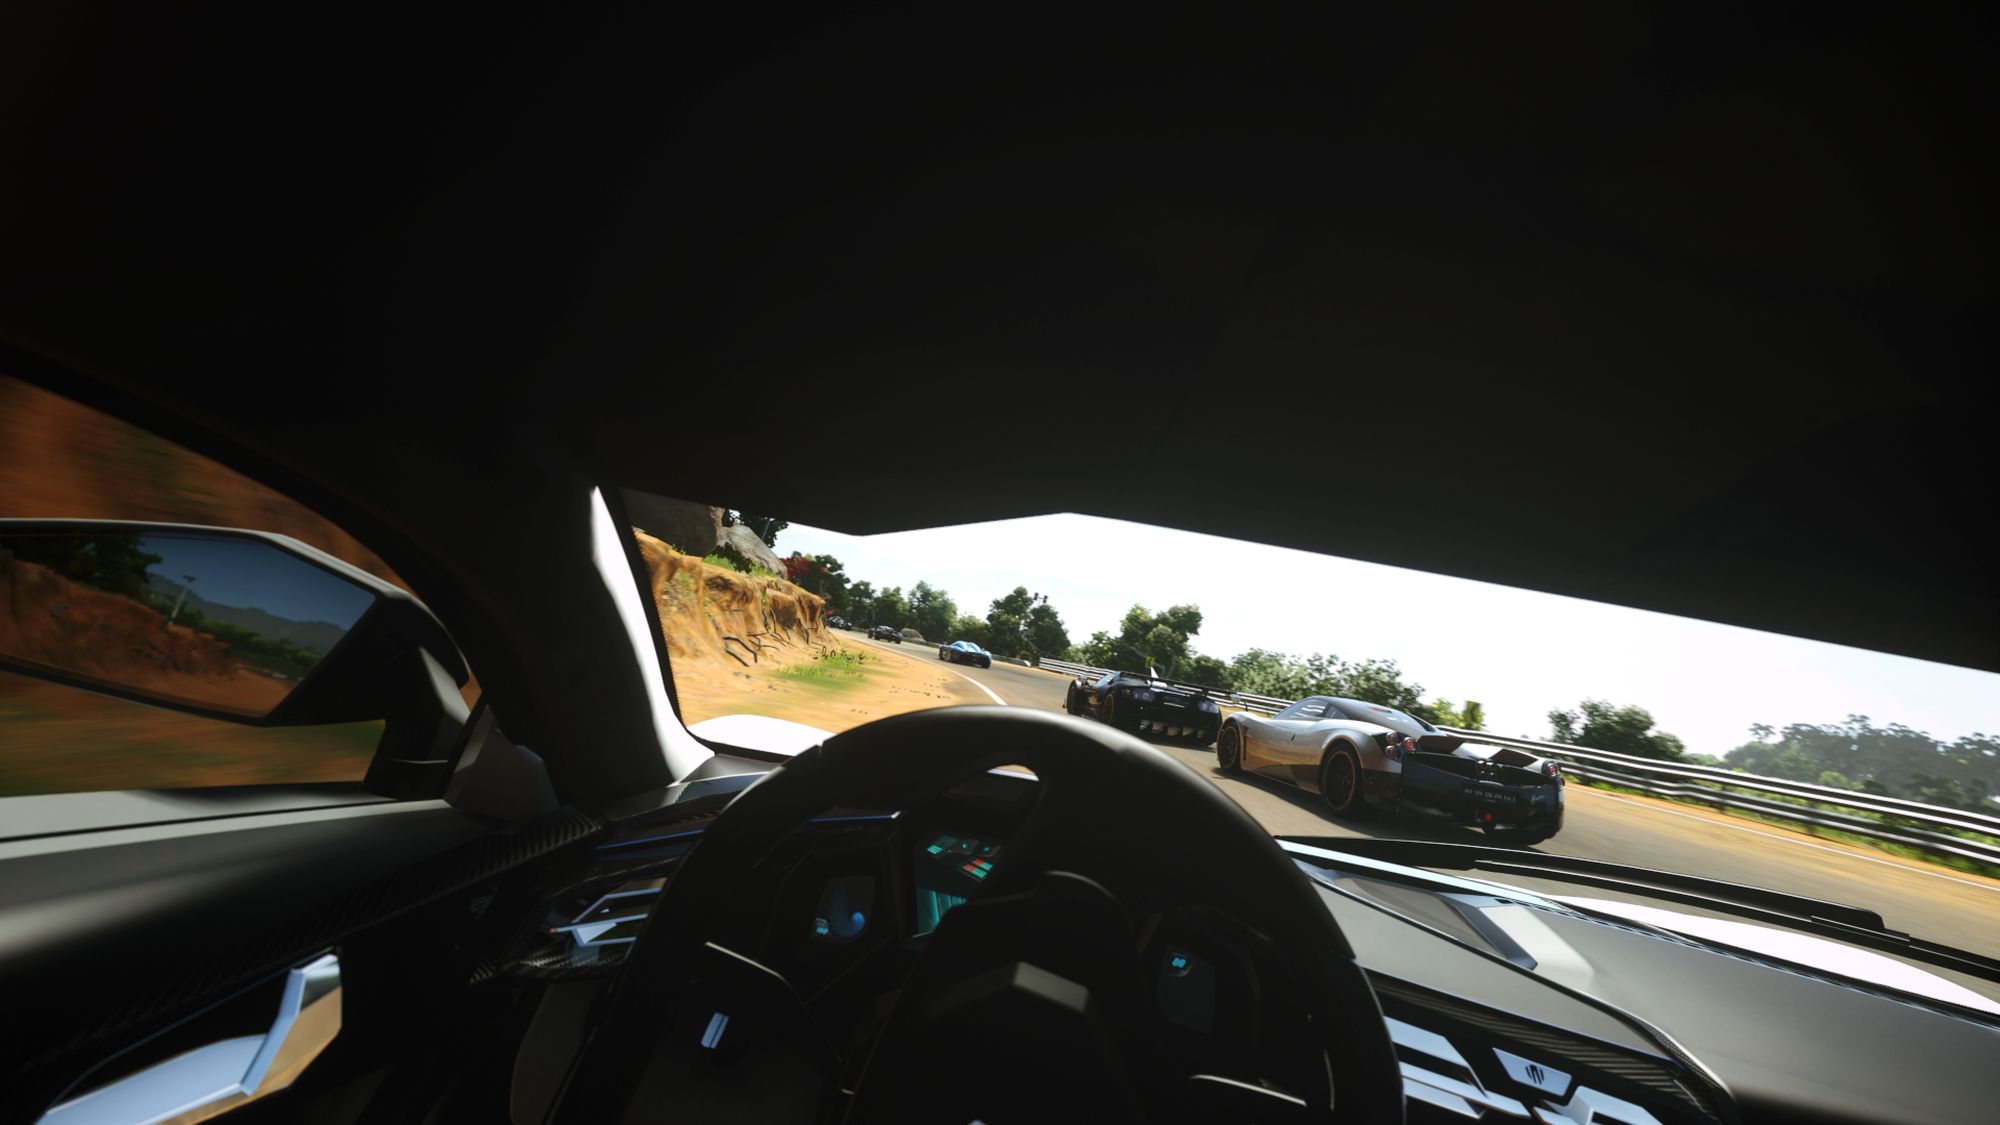 Driveclub VR PlayStation VR